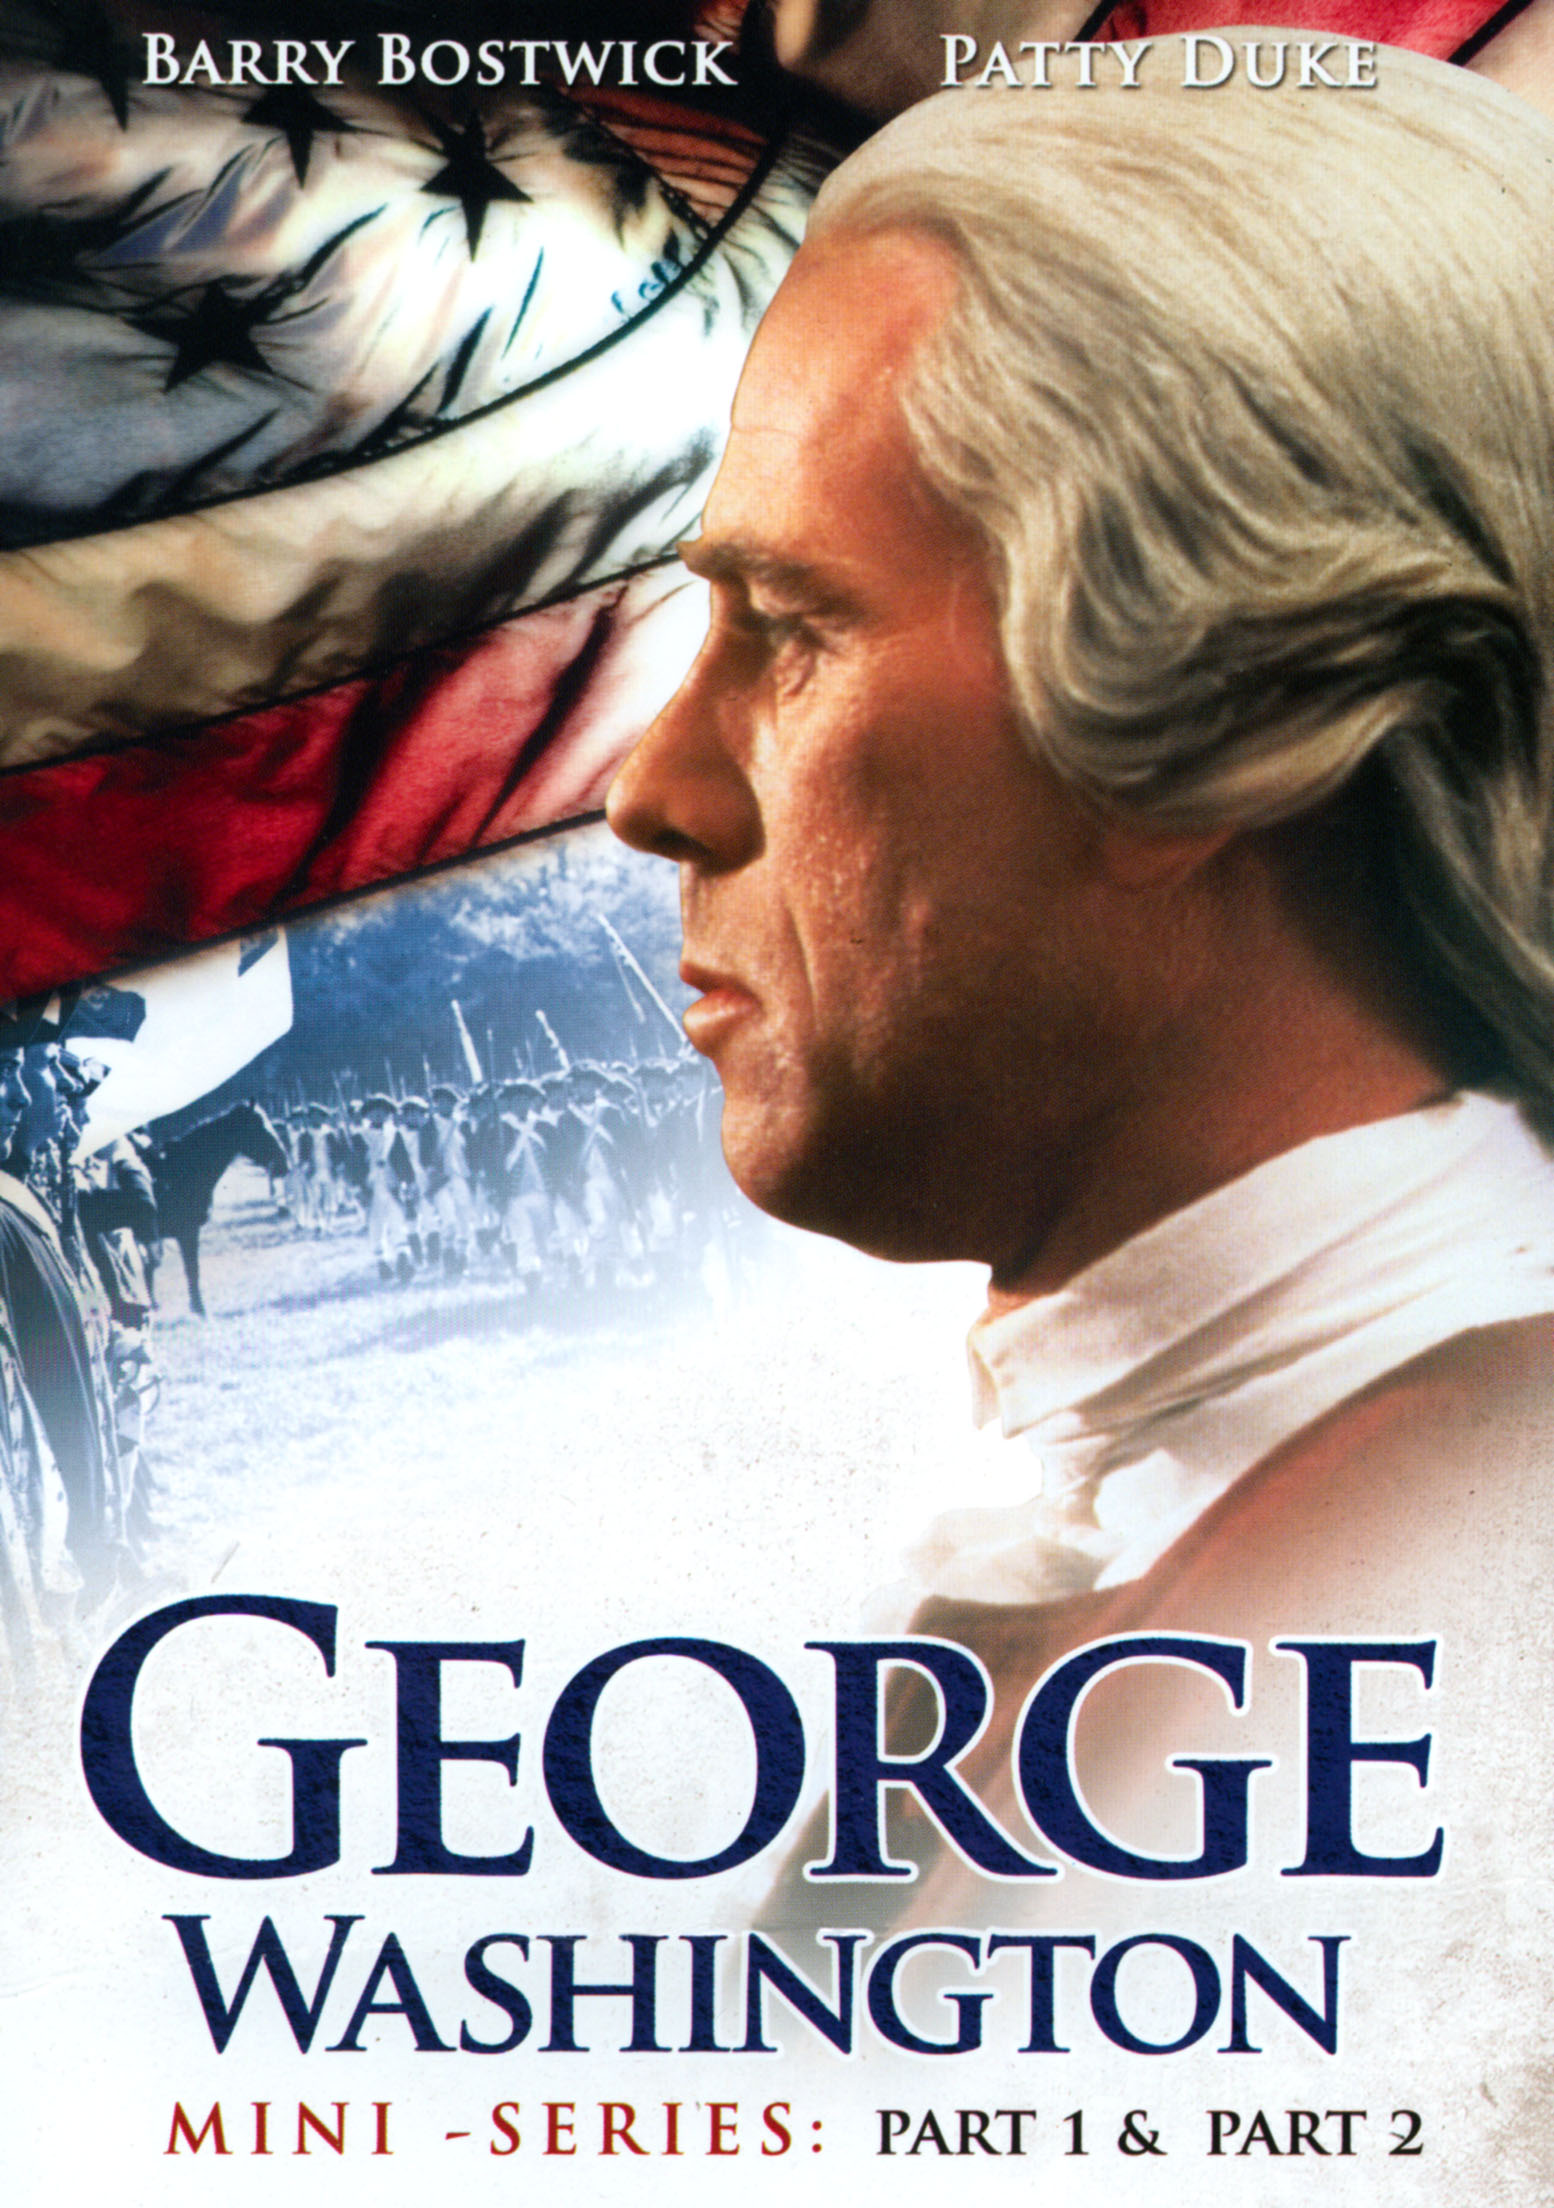 George Washington in the American Revolution, 1775-1783 by James Thomas Flexner